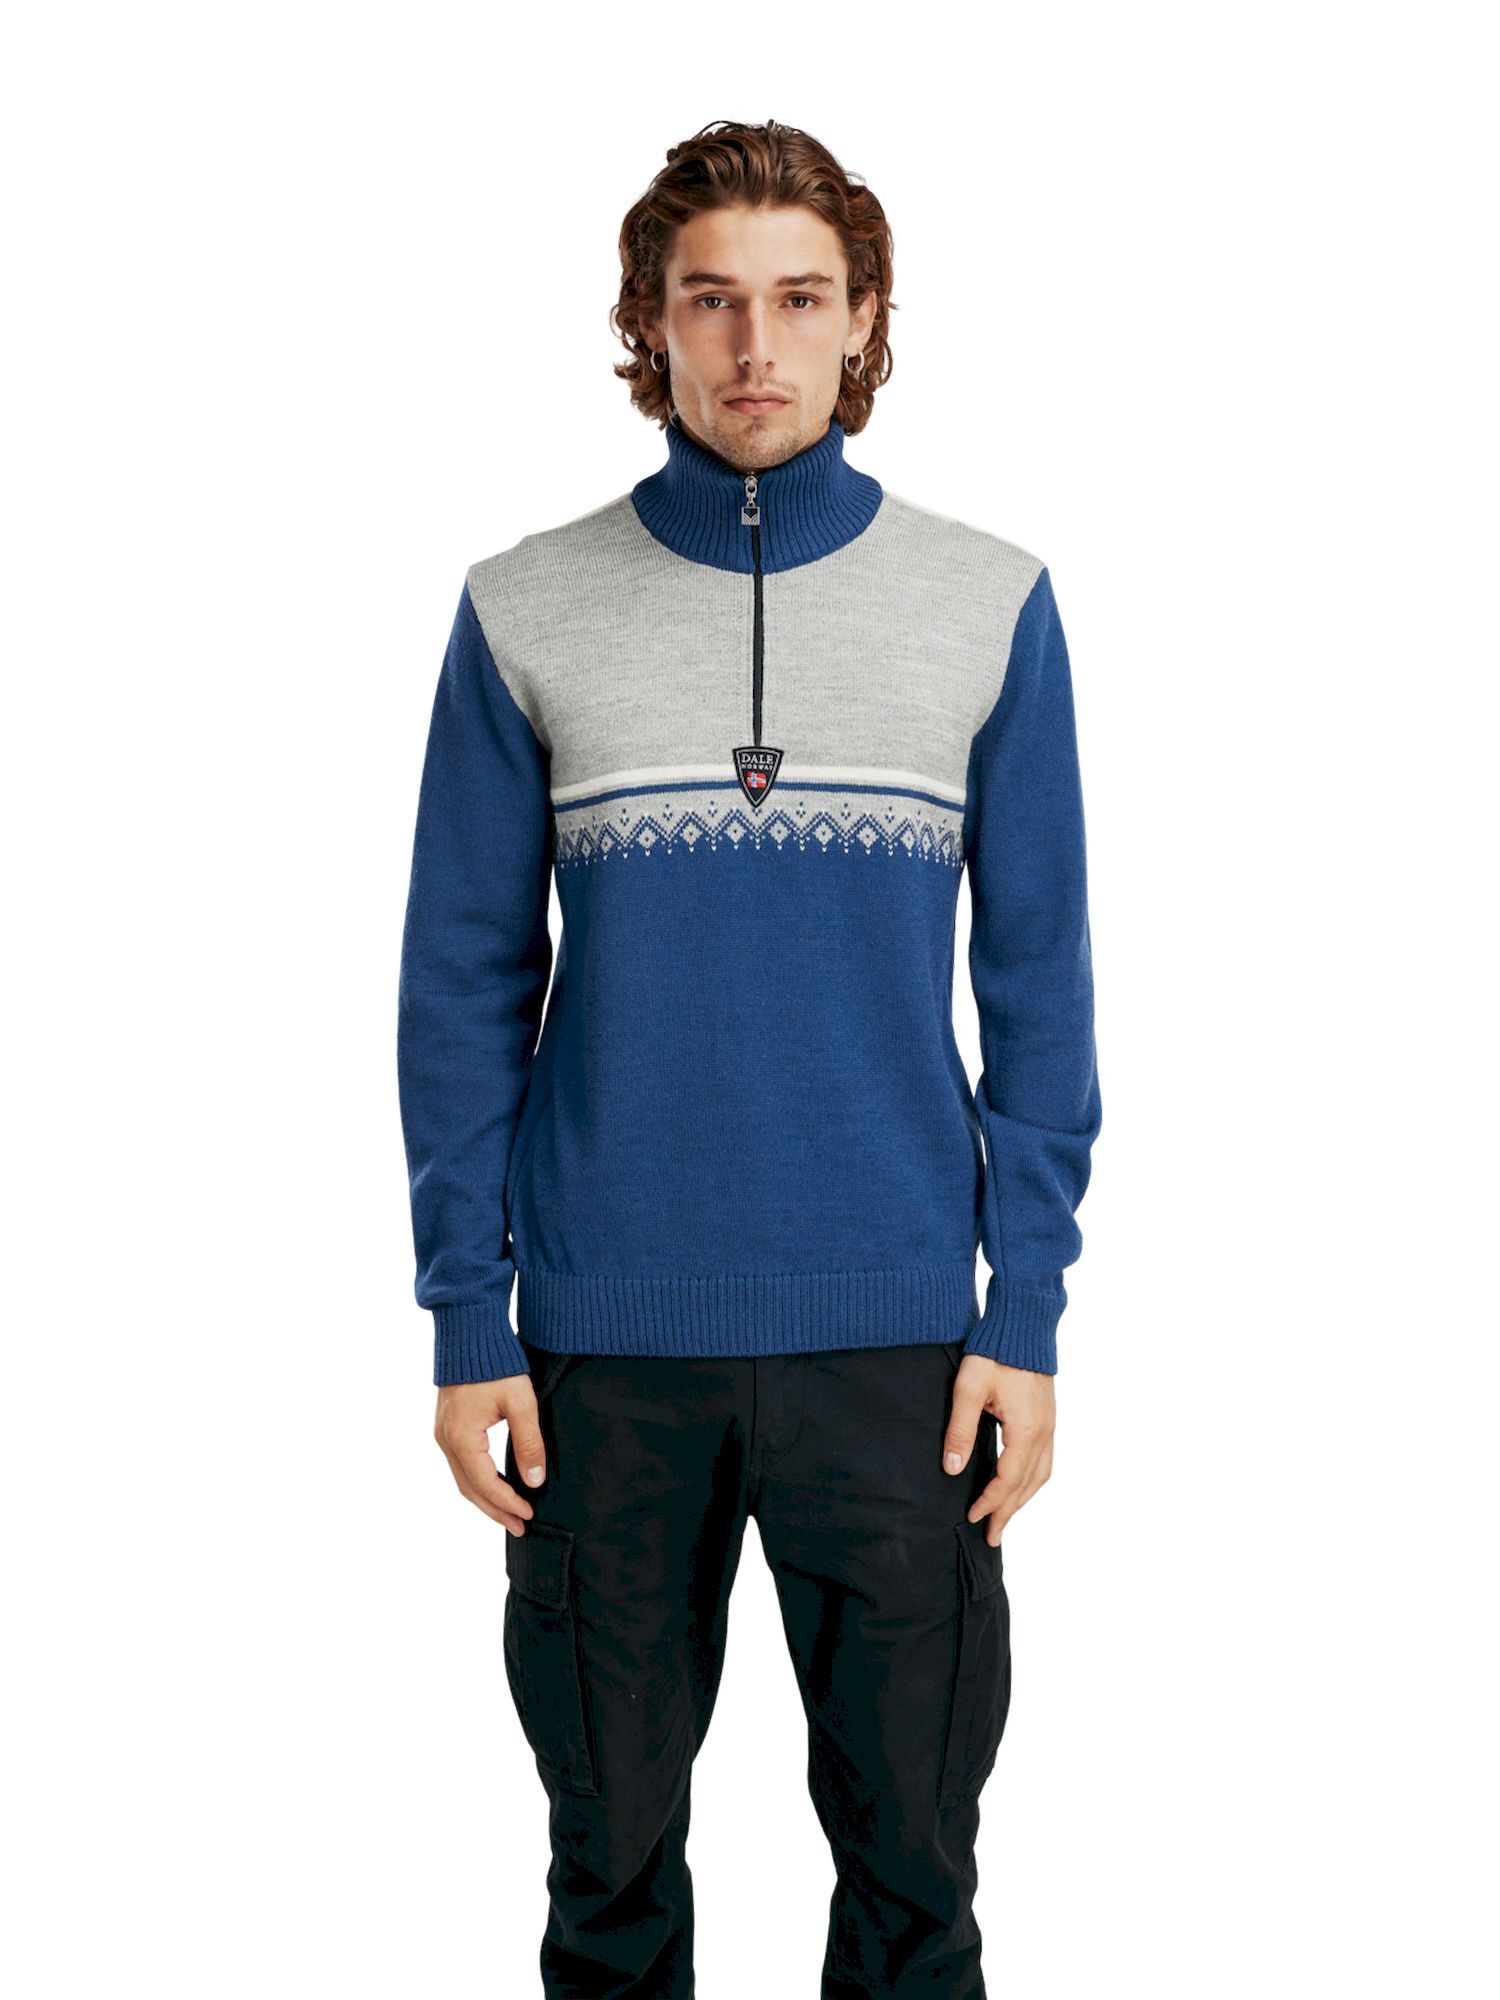 Dale of Norway Lahti Sweater  - Jumper - Men's